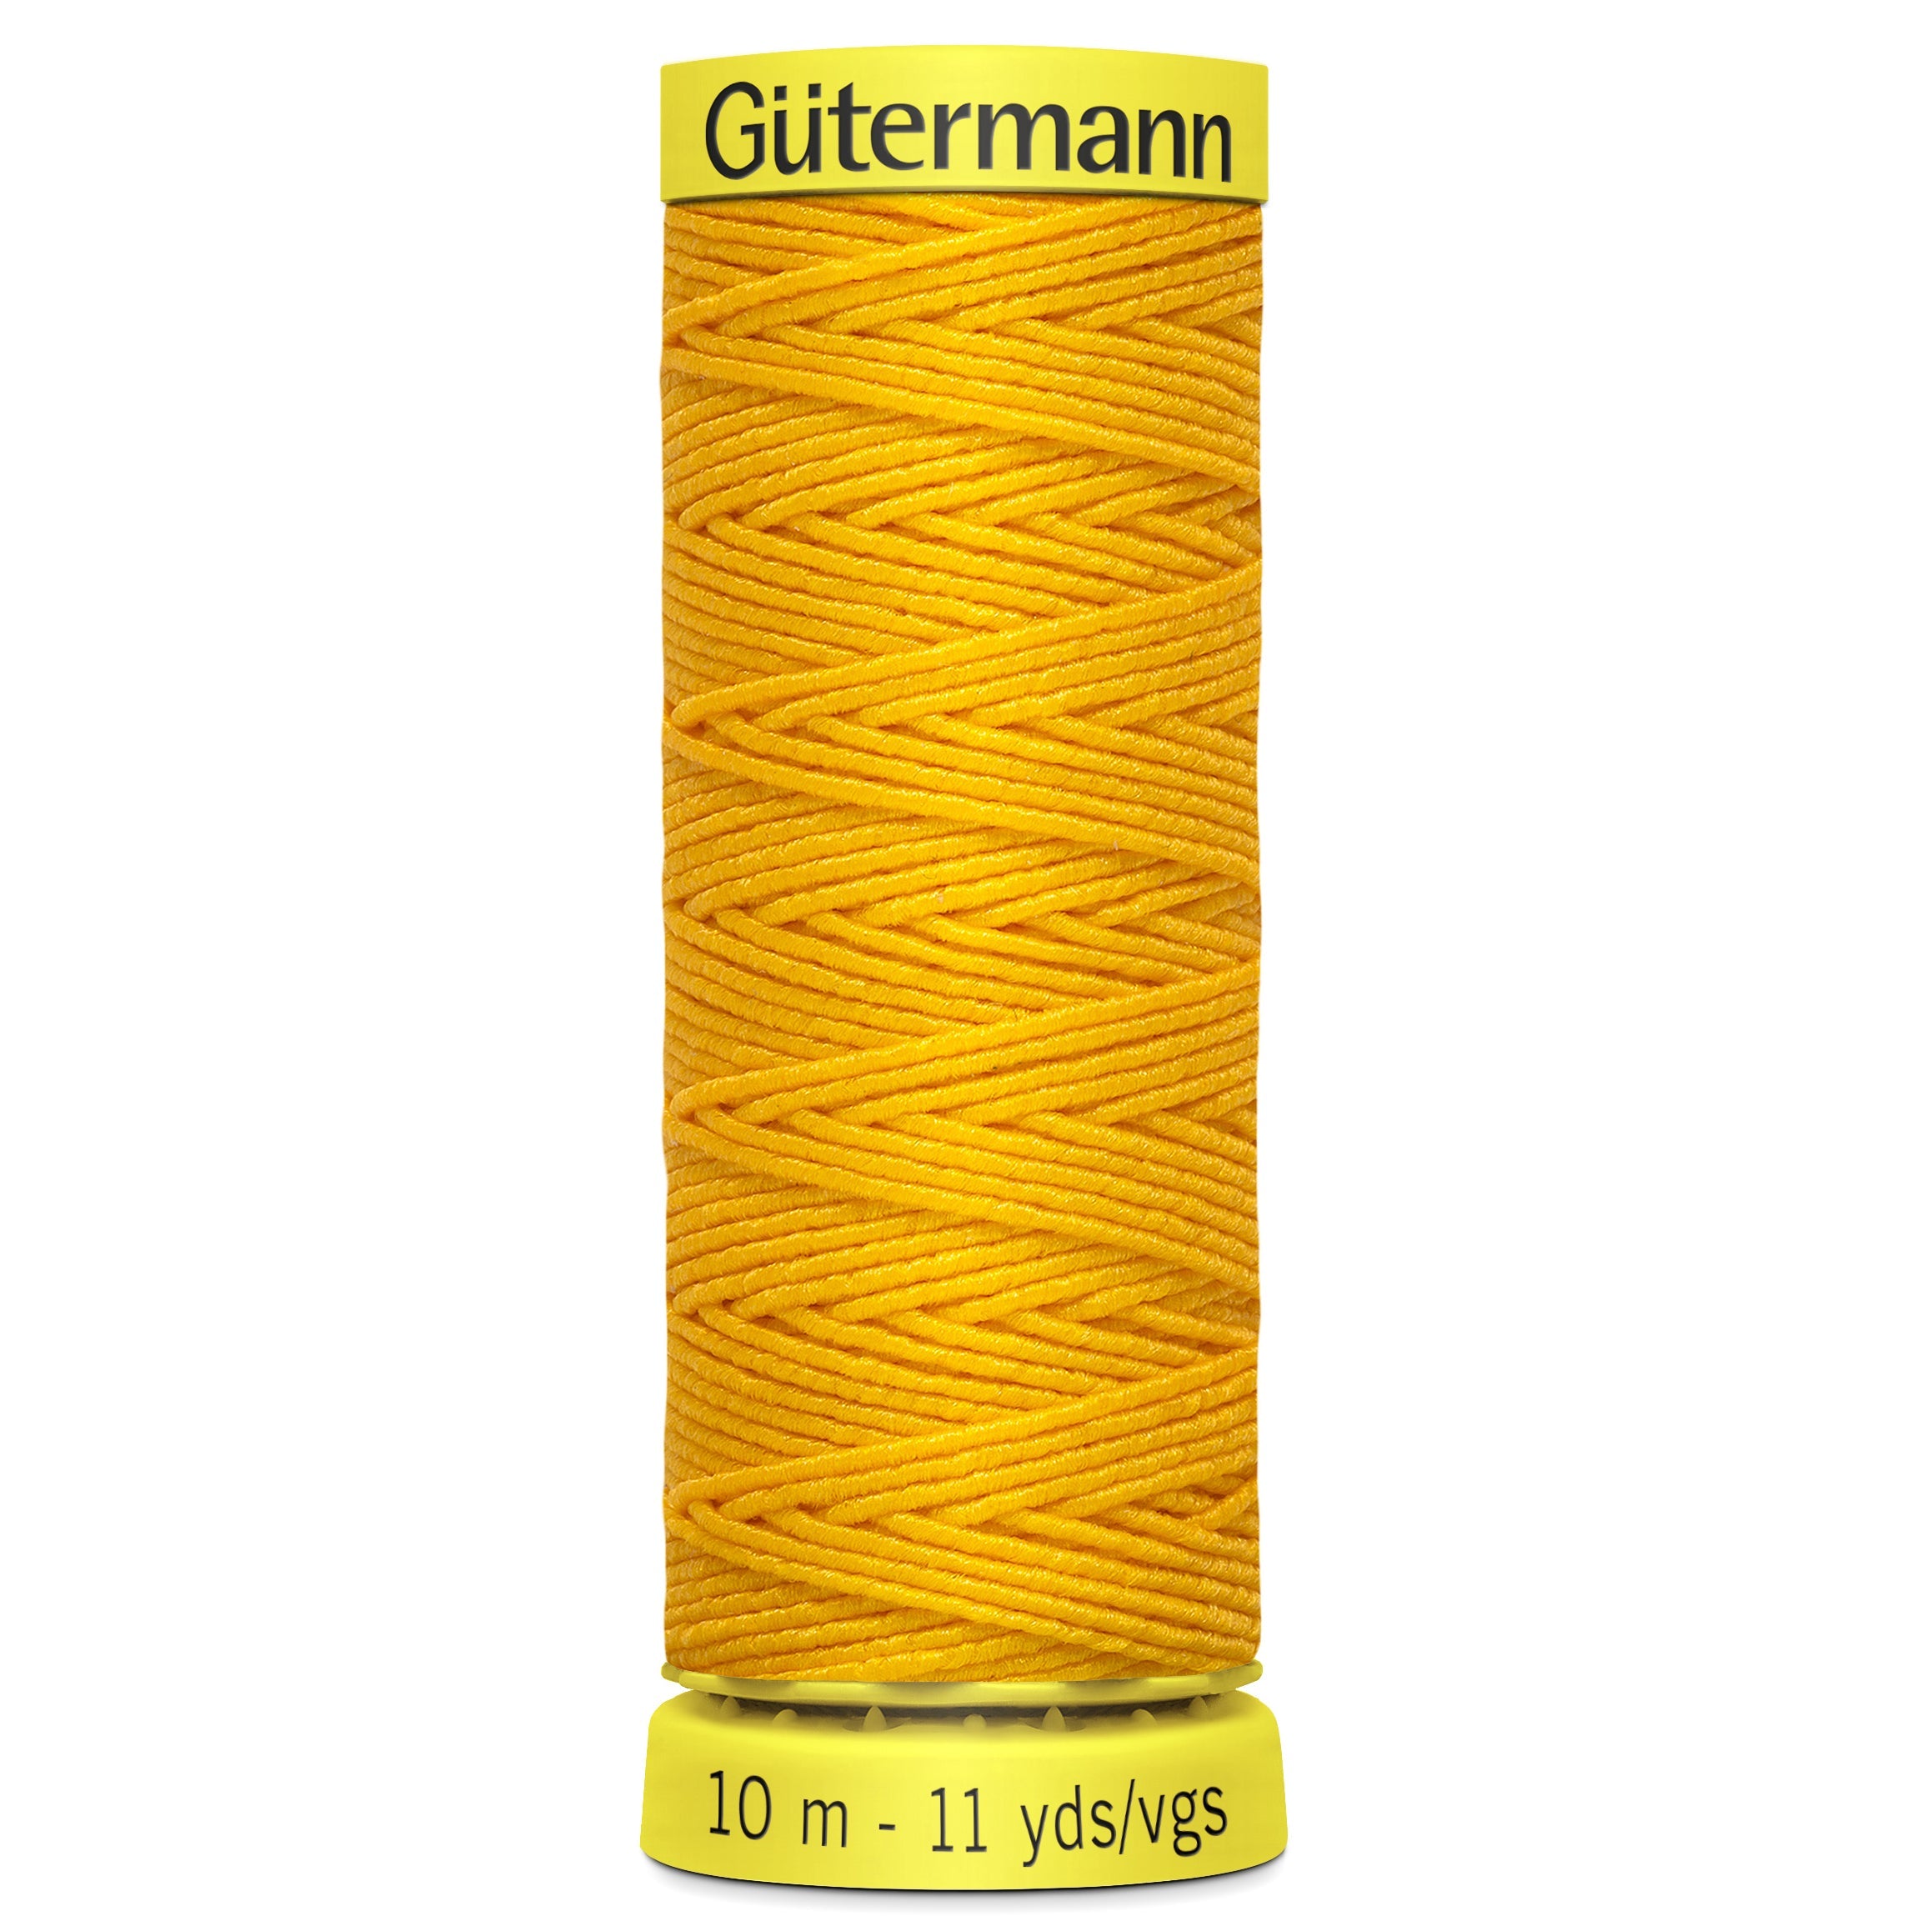 Gutermann Shirring Elastic Thread from Jaycotts Sewing Supplies